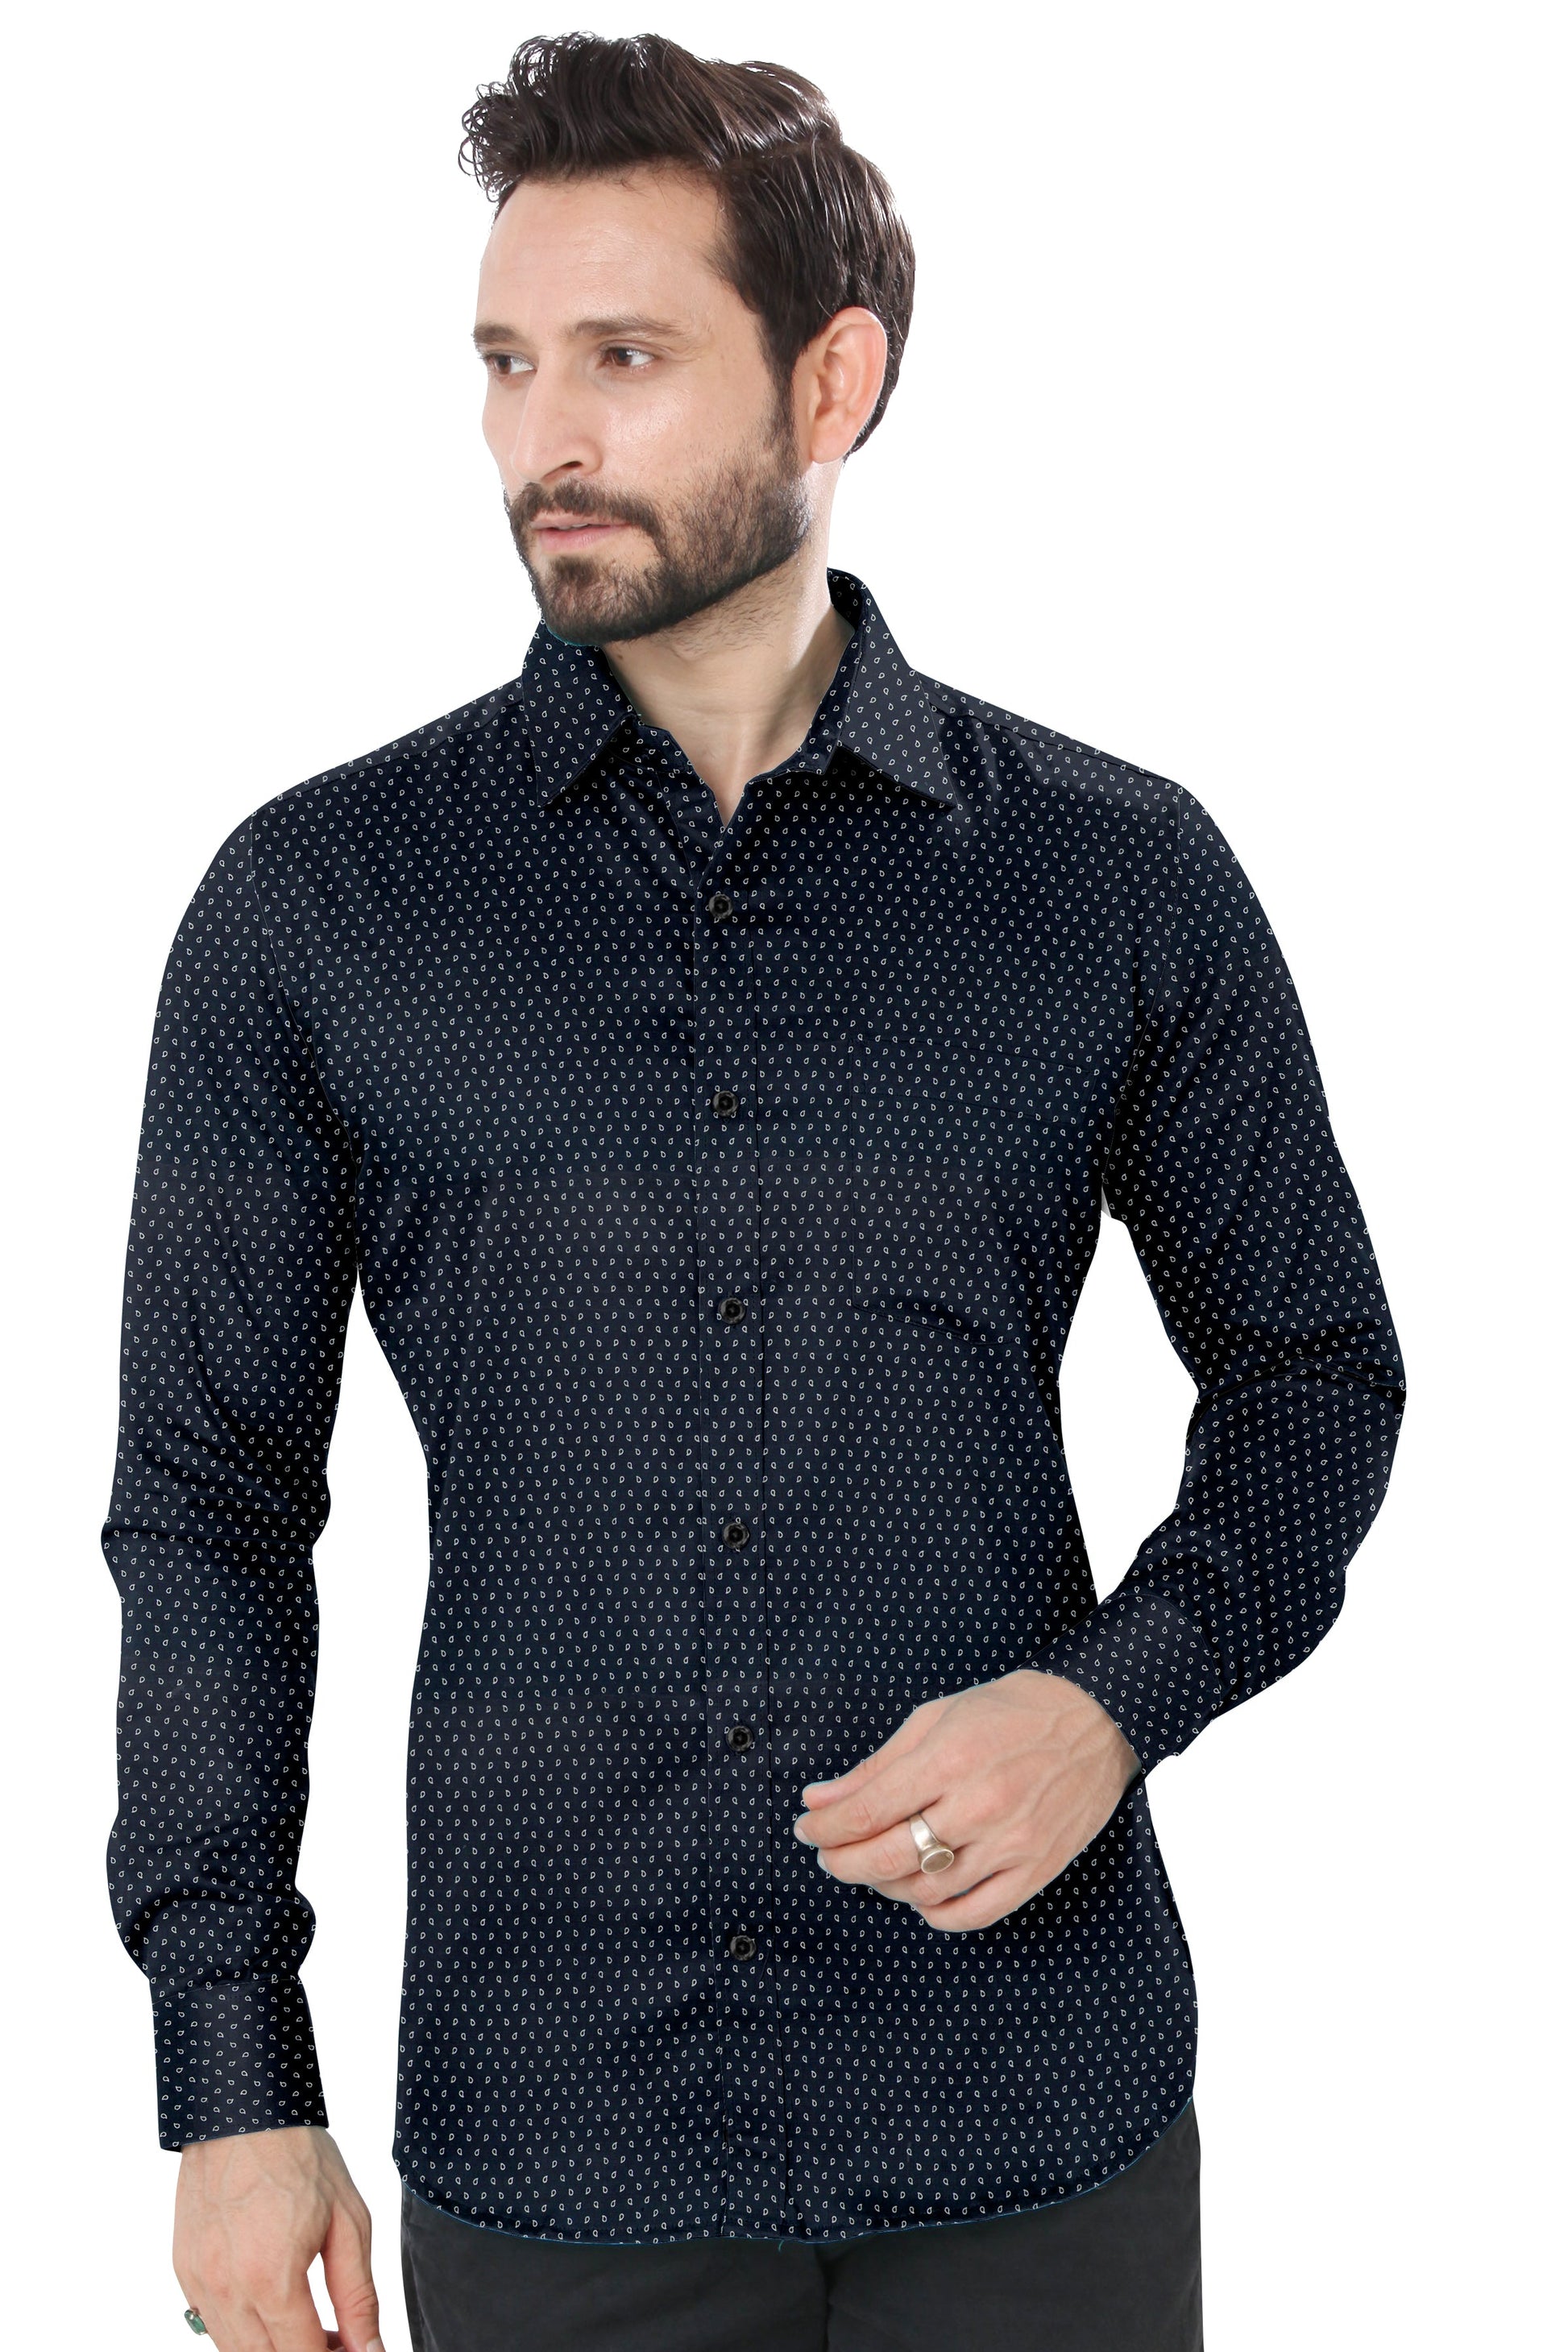 Men's Black Casual Shirt Full Sleeves 100% Cotton 